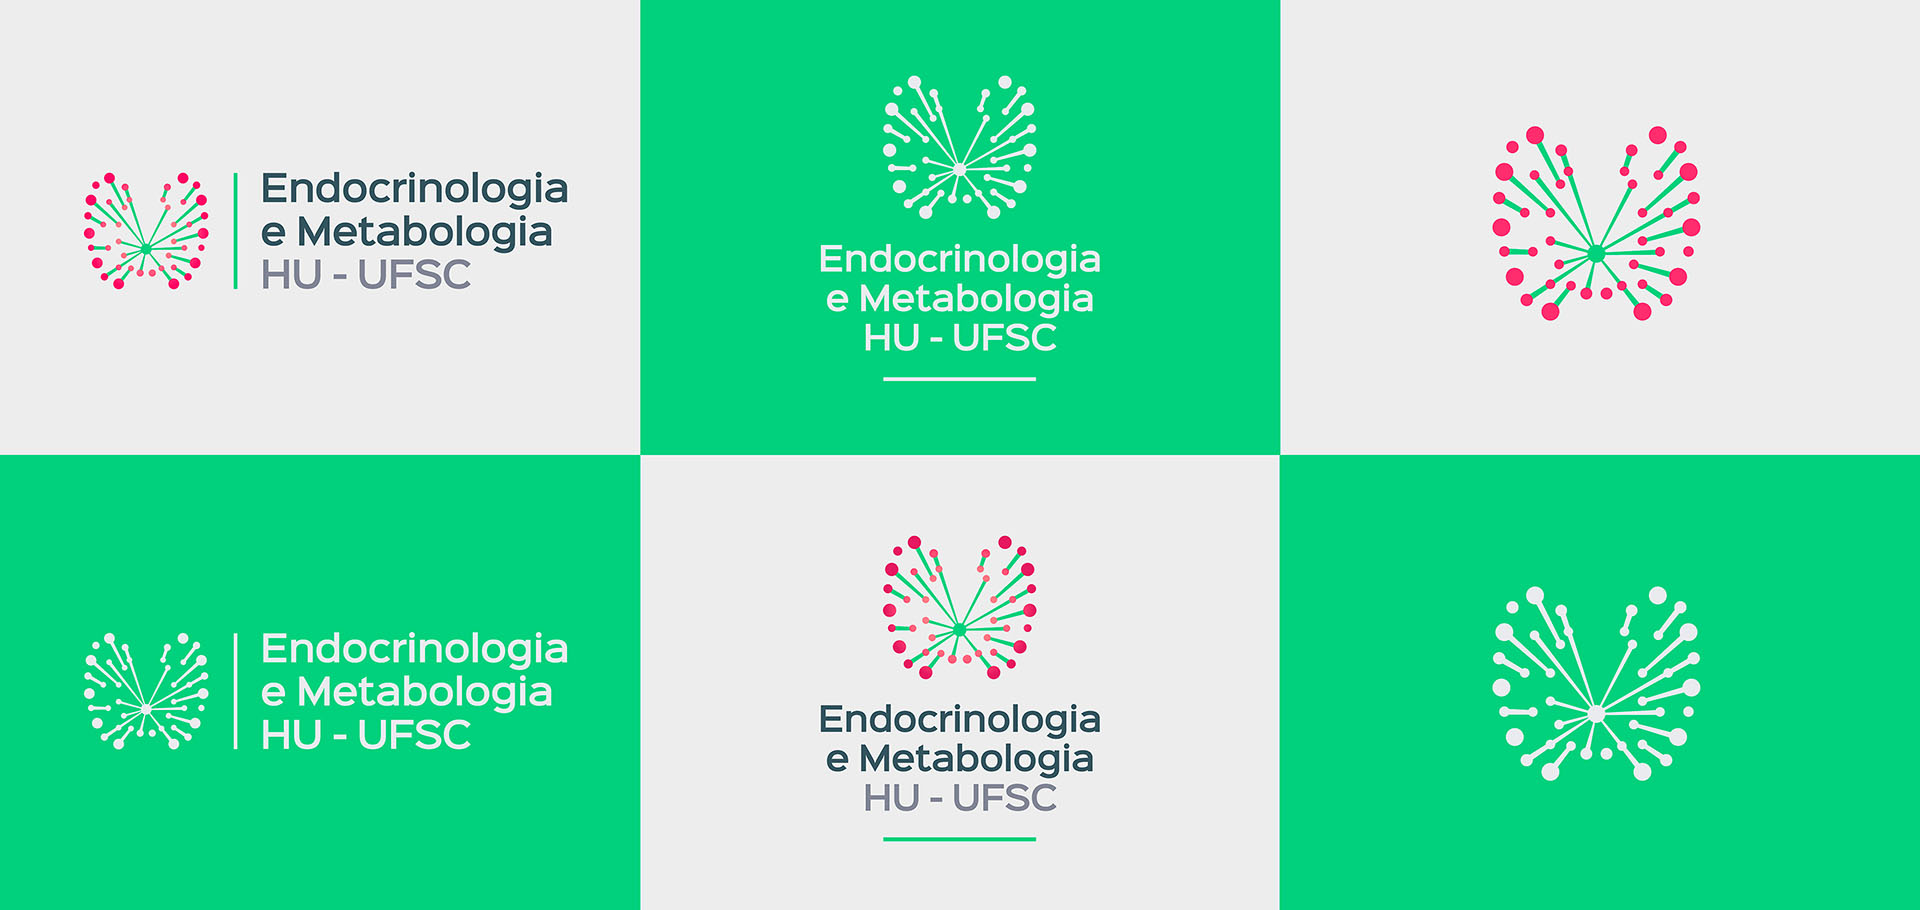 health logo endocrinology metabology service Universitary Hospital UFSC brazil